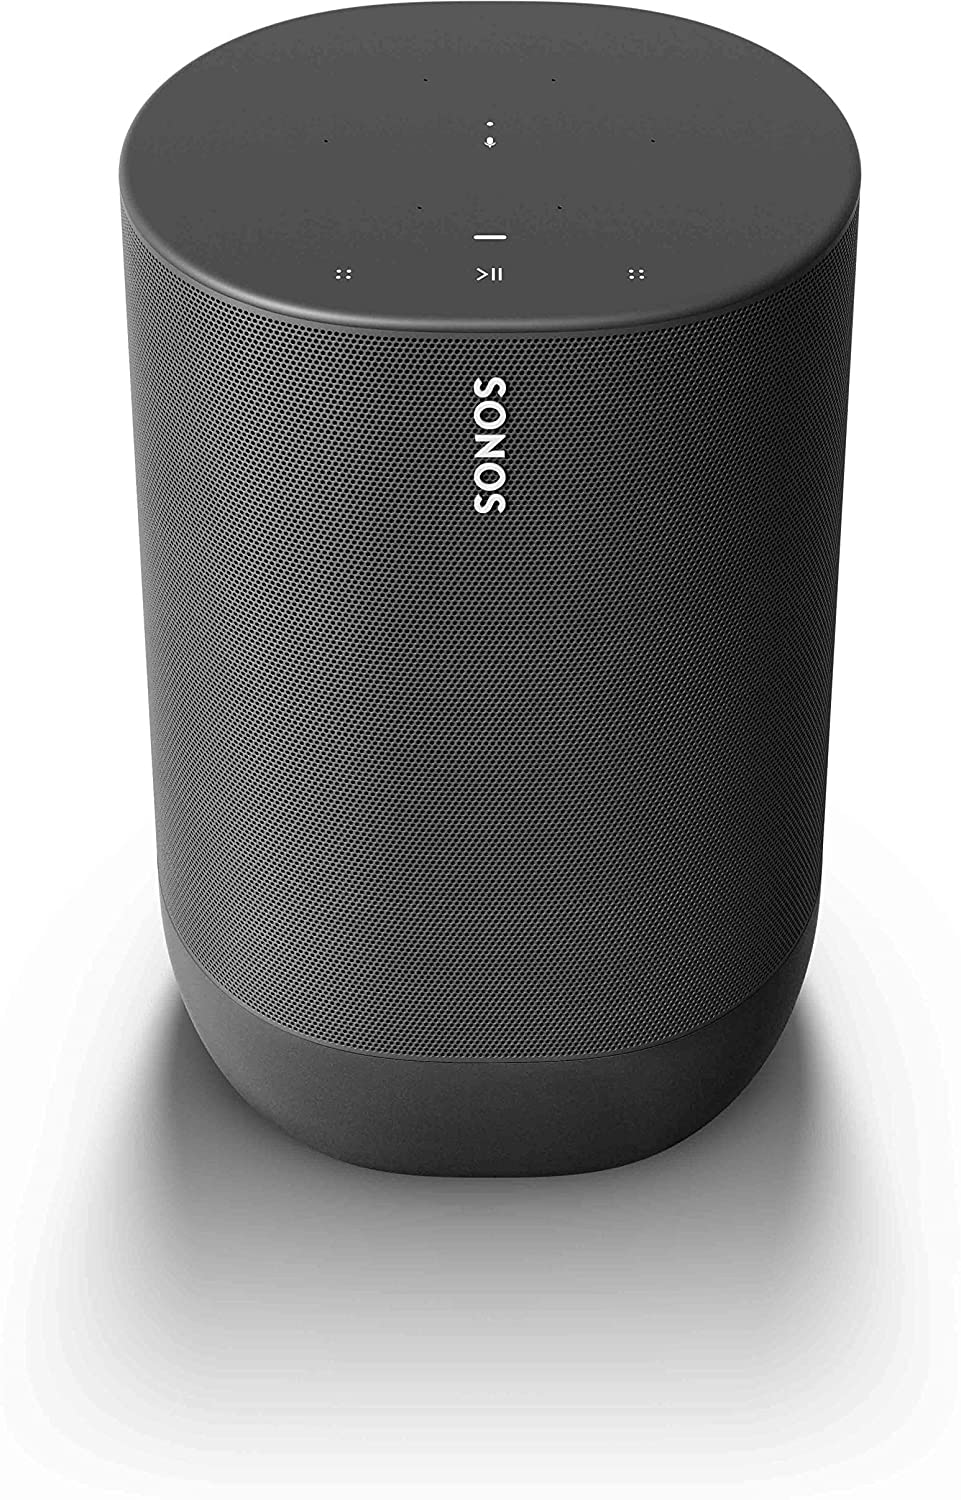 Sonos Multiroom System Comparison - Review